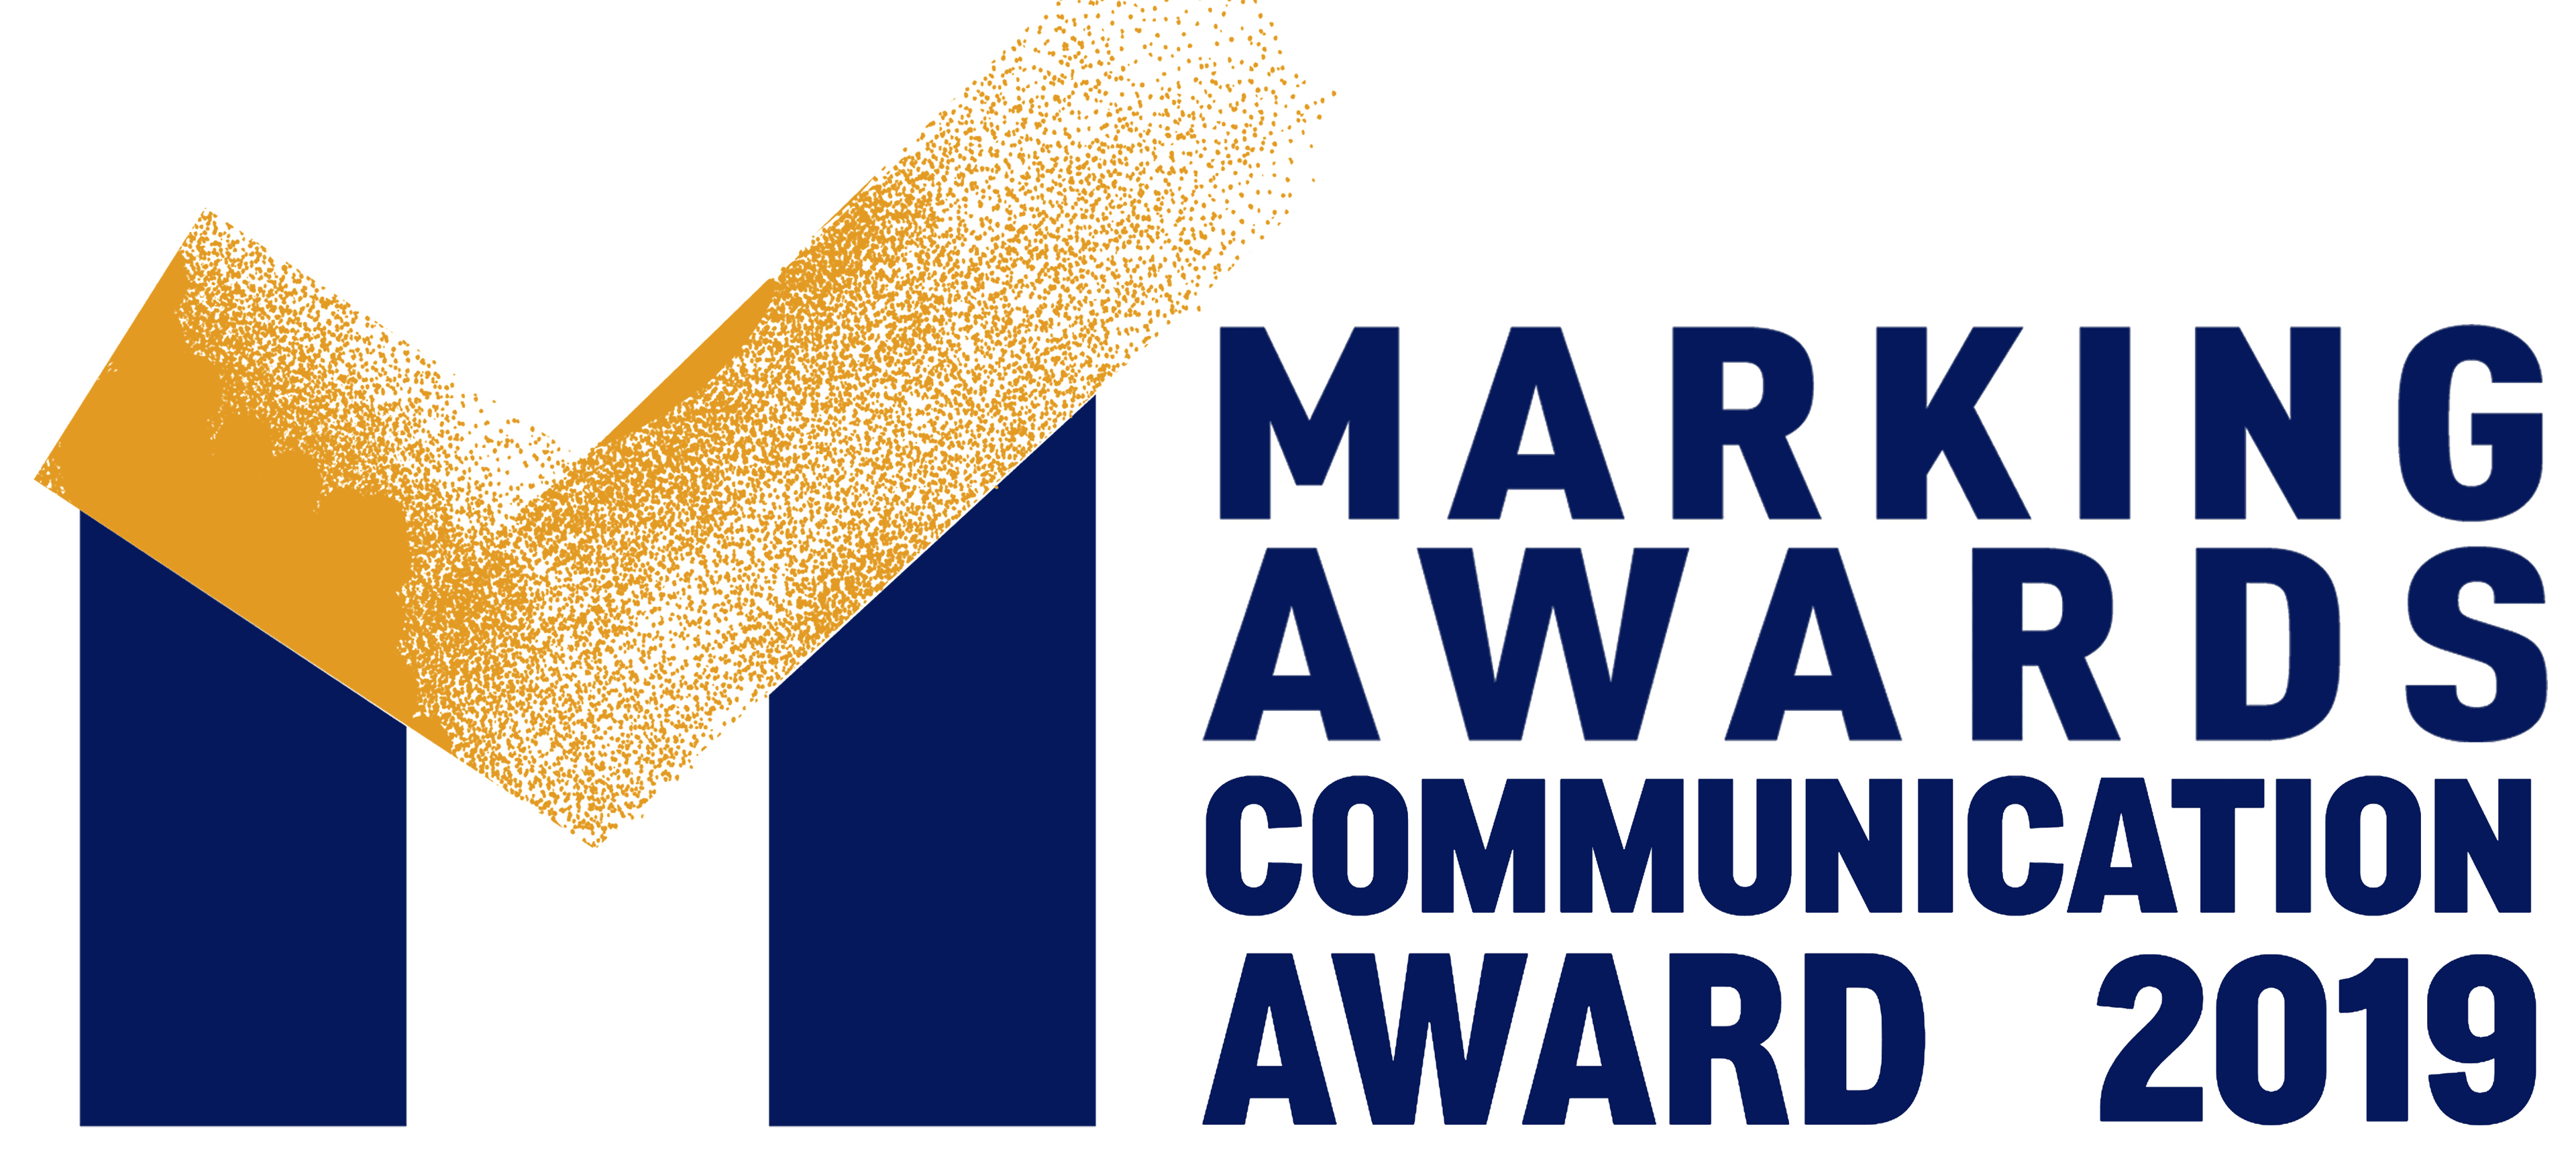 MARKING_COMMUNICATION_AWARD_2019